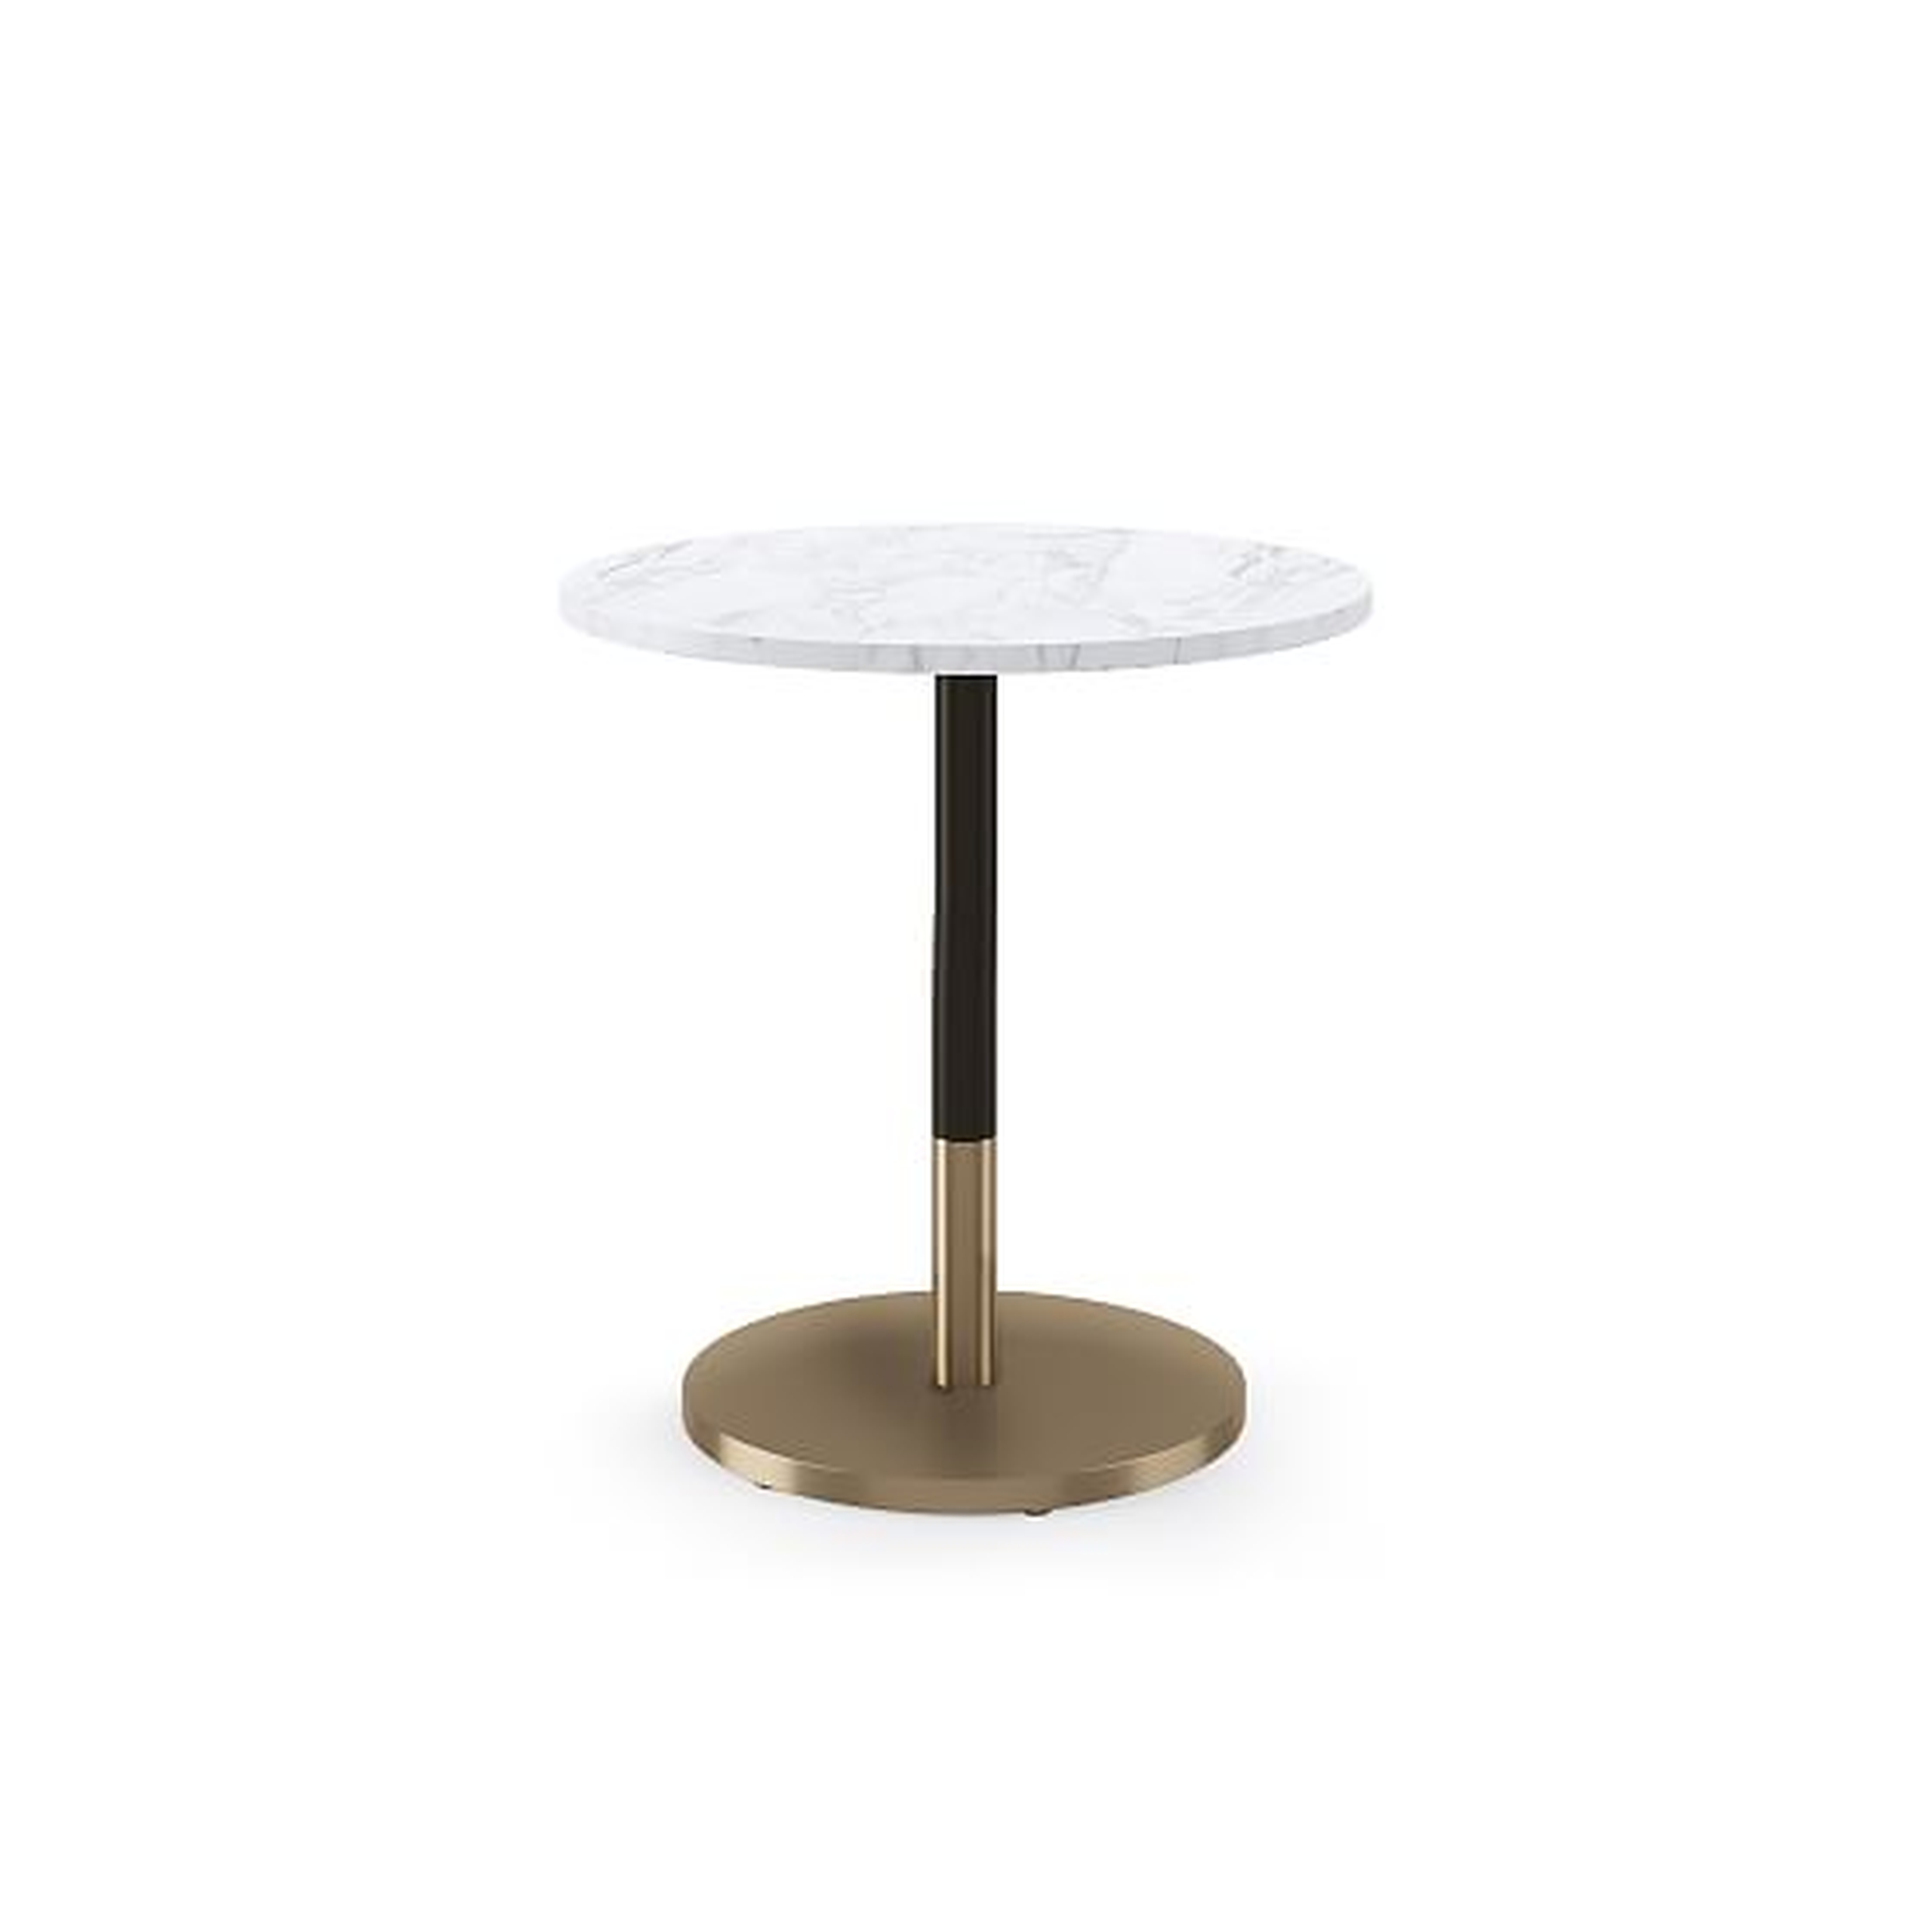 Restaurant Table:Top 30" Round:White Carrera Marble + Dining Ht Orbit Base: Bronze/Brass - West Elm